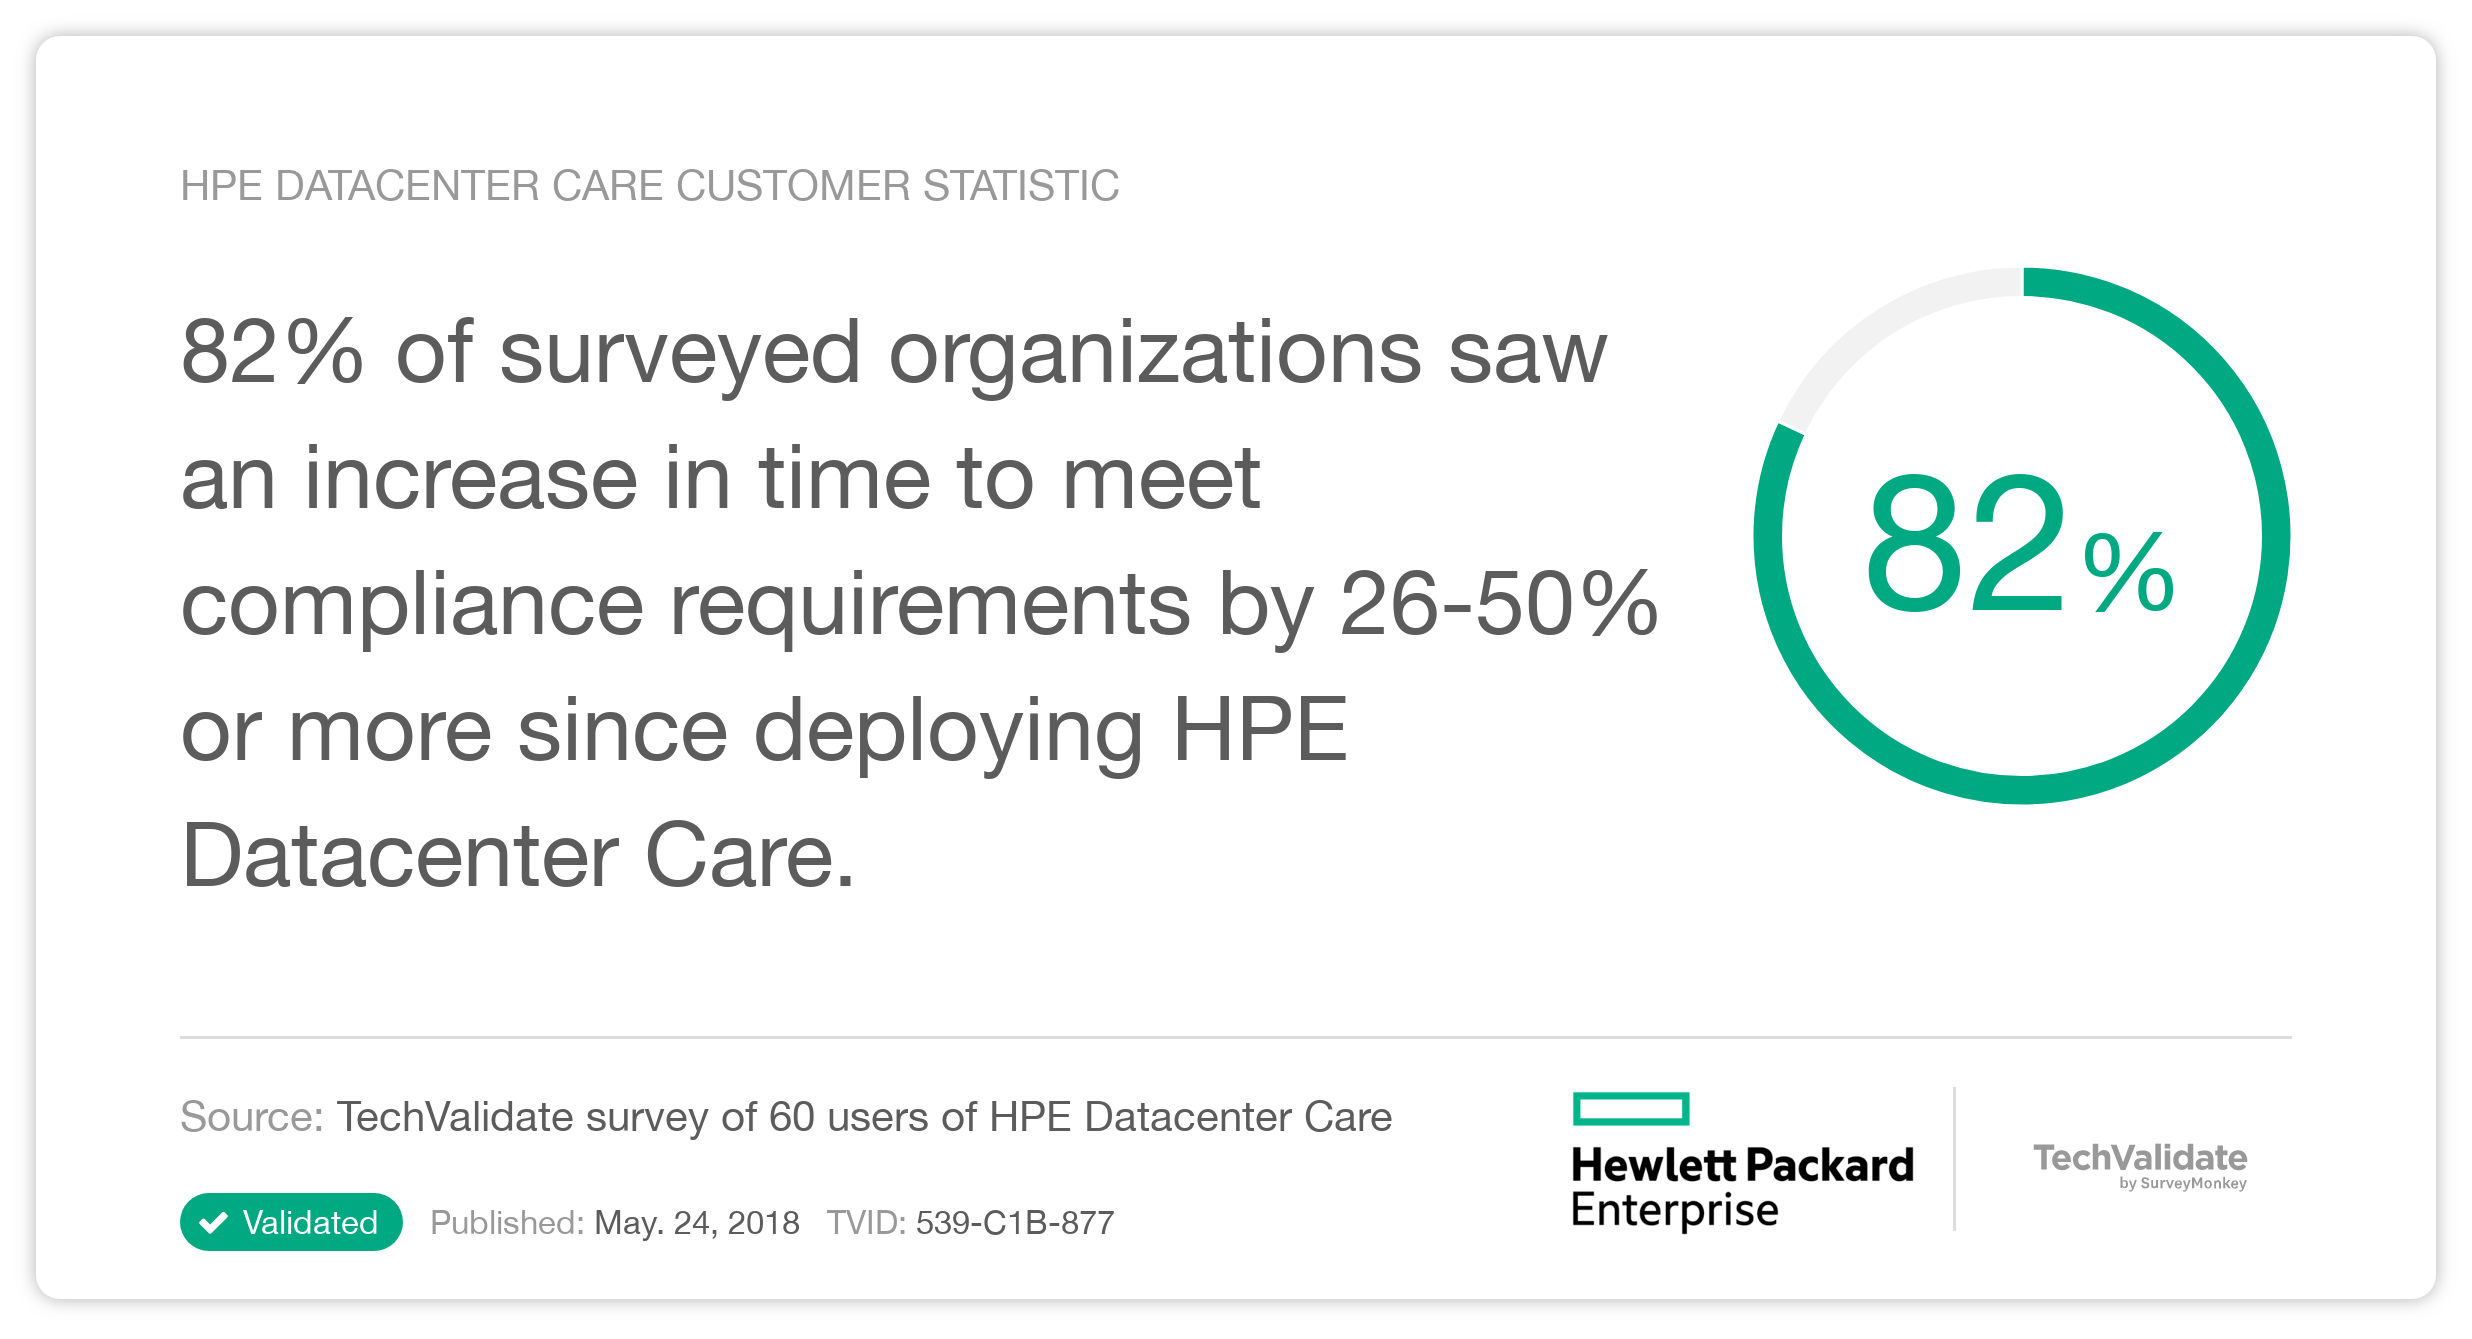 HPE Datacenter Care Customer Statistic